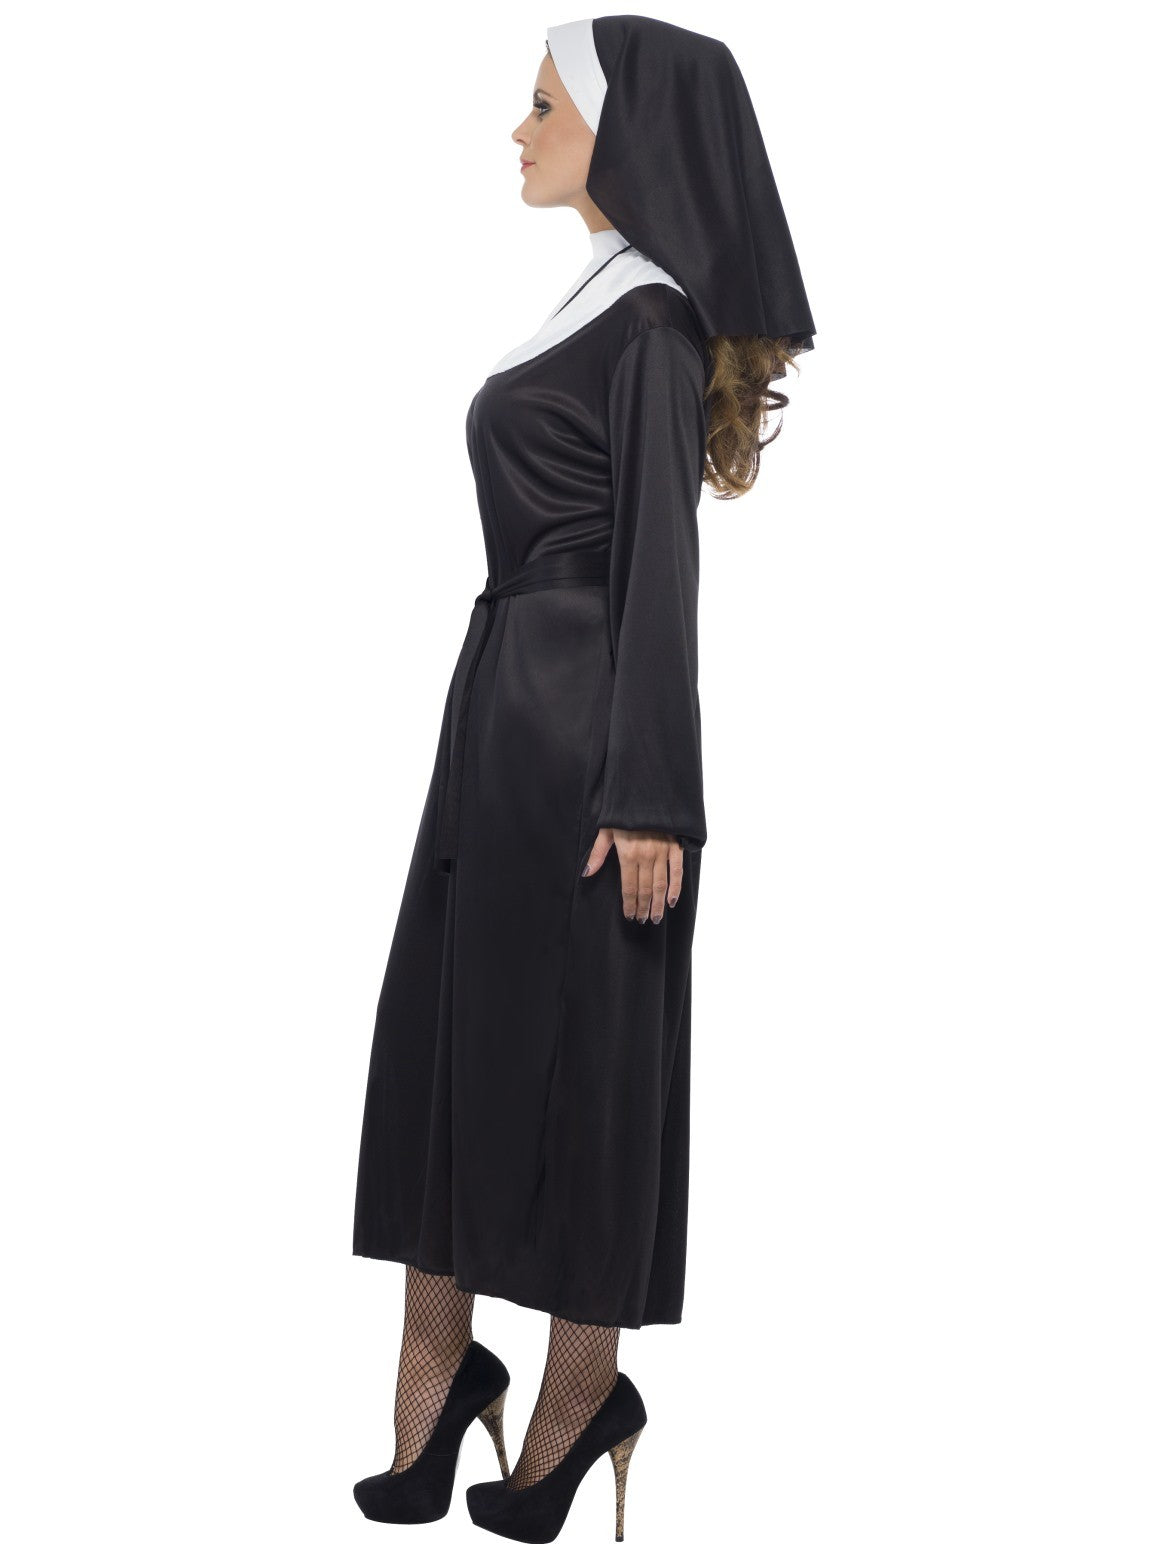 Mother Nun Costume